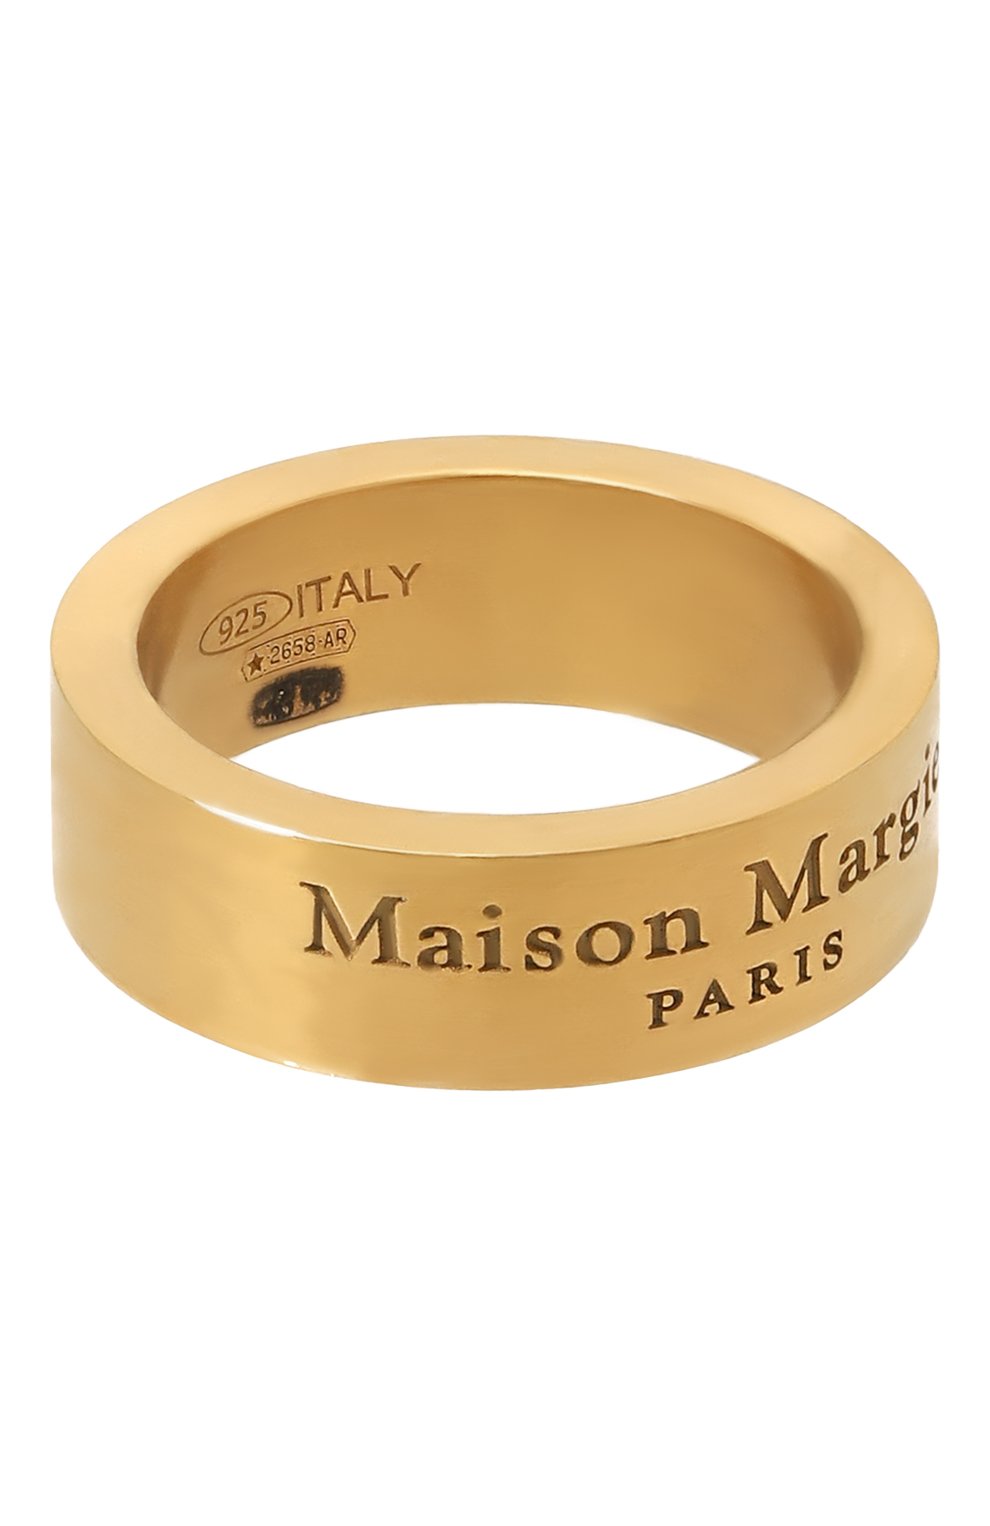 Цум кольца. Кольцо Maison Margiela. Maison Margiela кольцf. Margiela кольца сет 4 кольца. Maison Margiela Ring.